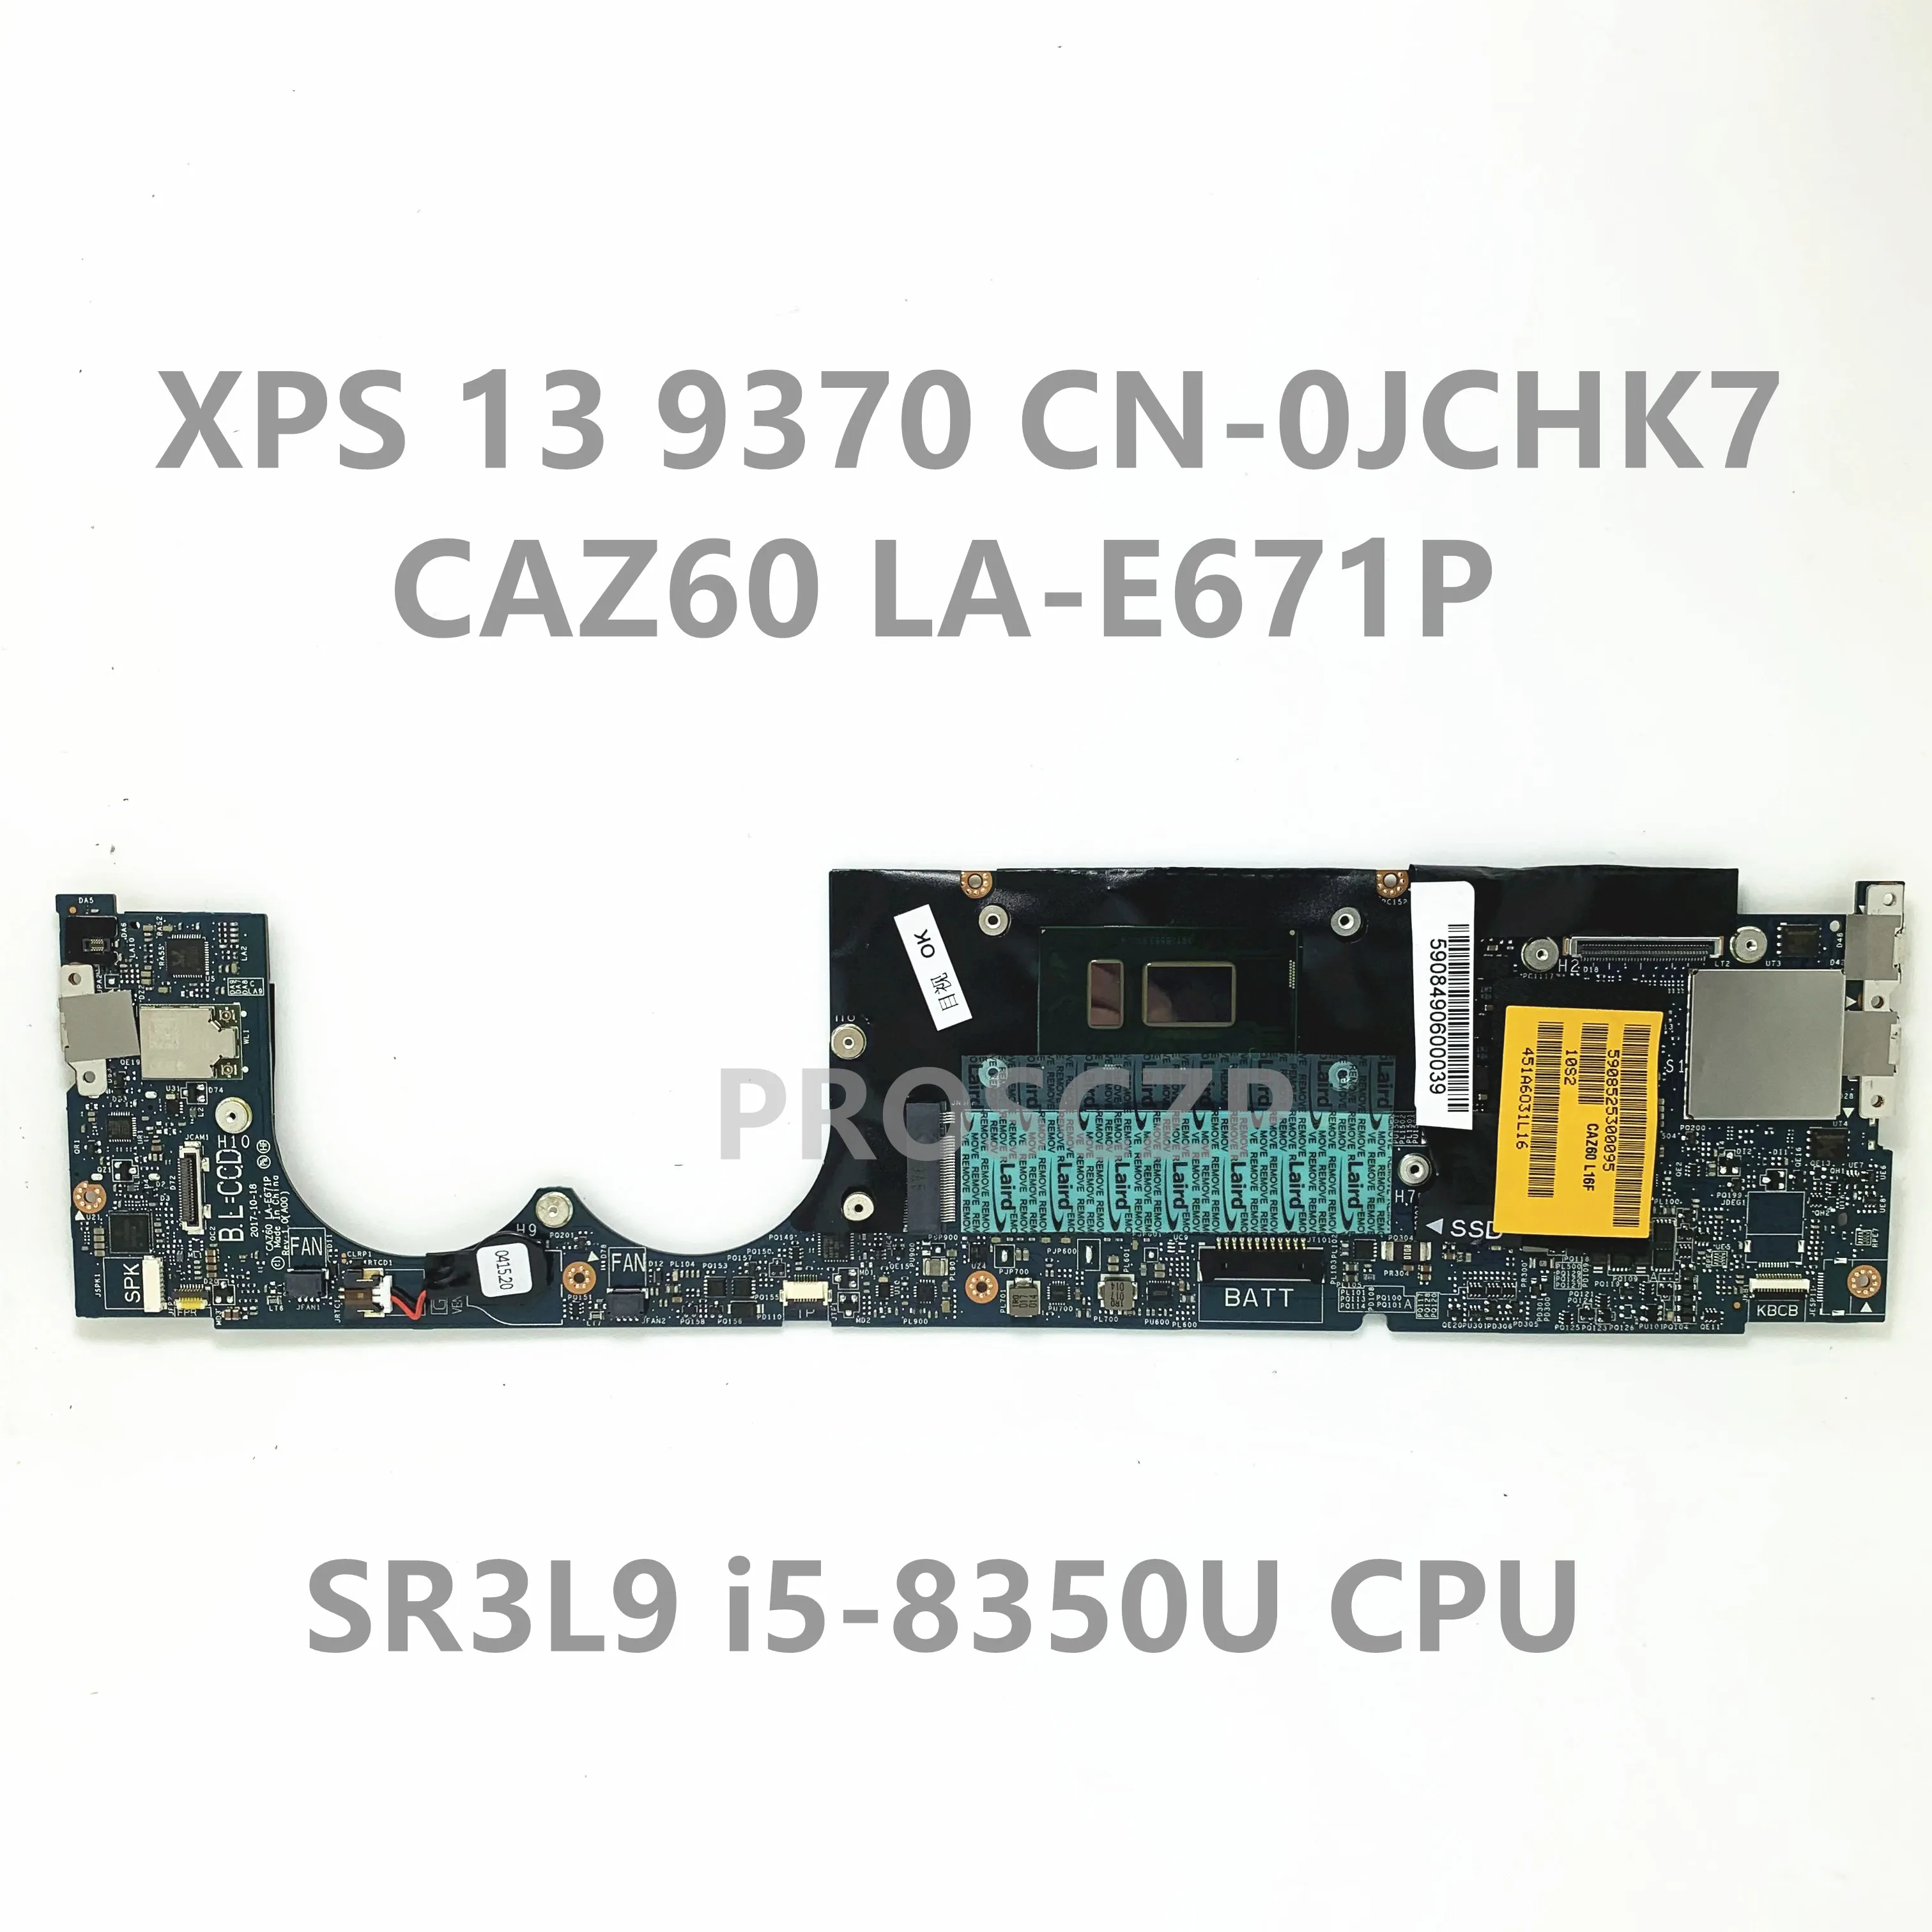 

JCHK7 0JCHK7 CN-0JCHK7 Mainboard For Dell XPS 13 9370 Laptop Motherboard CAZ60 LA-E671P W/ SR3L9 i5-8350U CPU 100%Full Tested OK